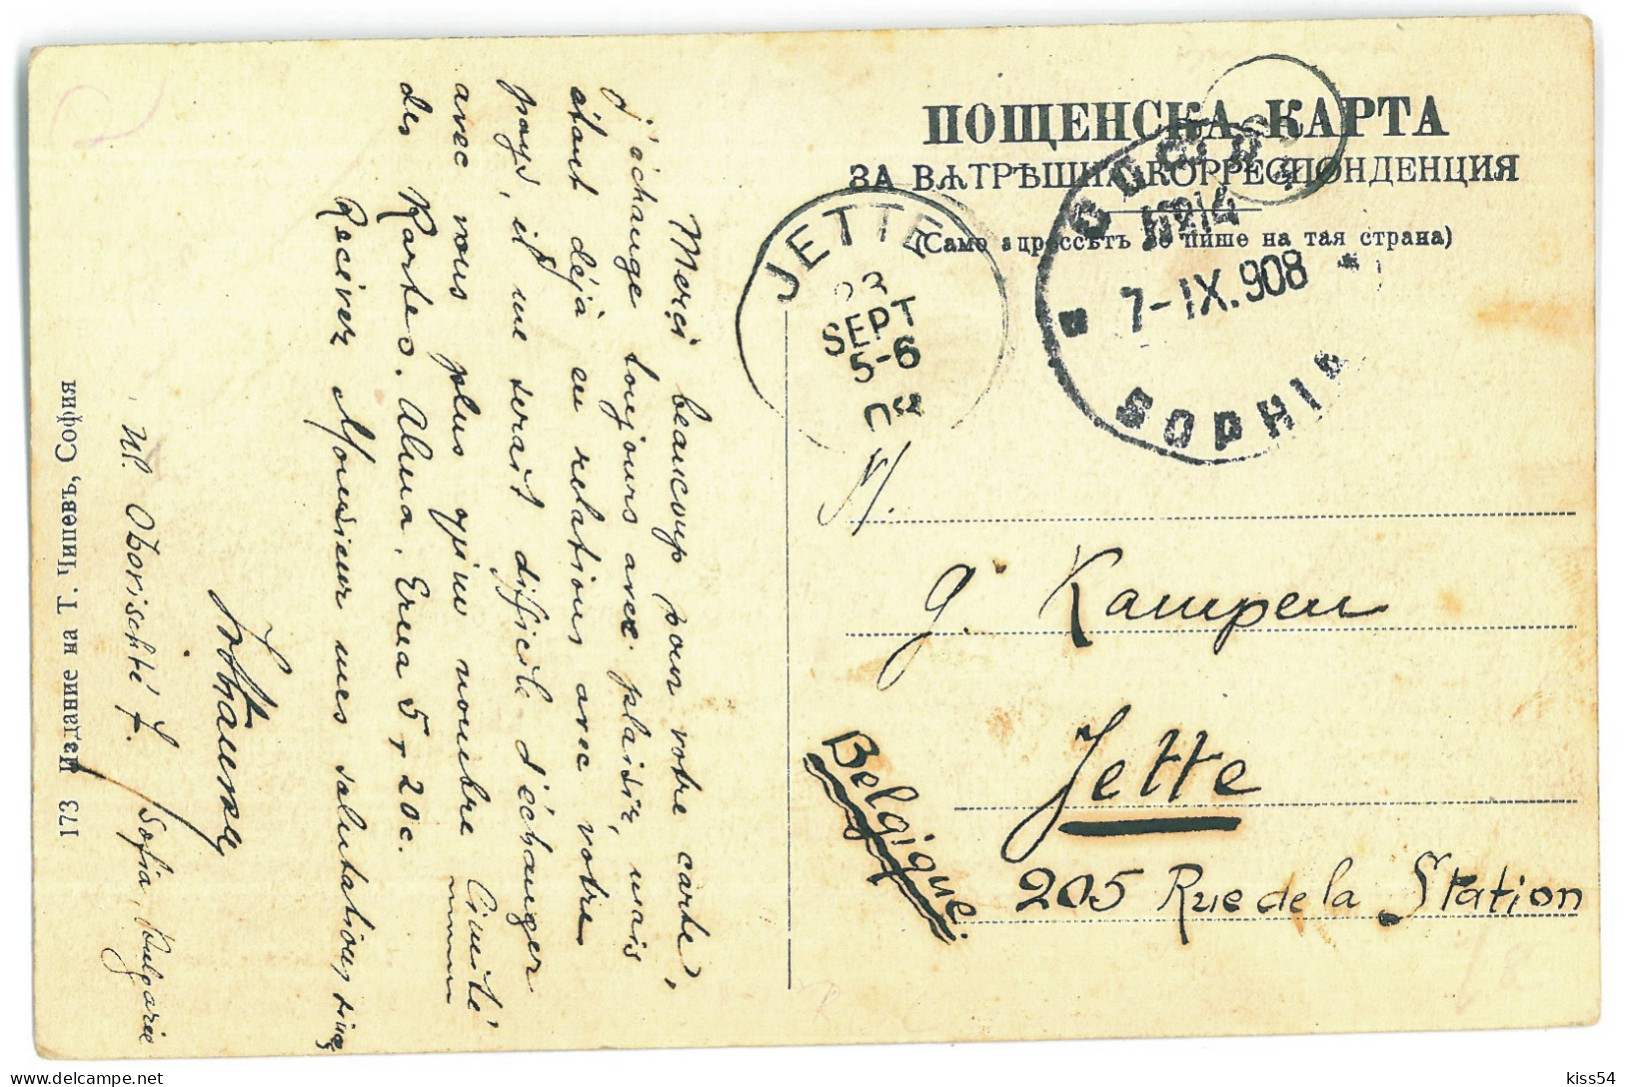 BUL 09 - 23471 SOFIA, Street Stores, Bulgaria - Old Postcard - Used - 1908 - TCV - Bulgarie